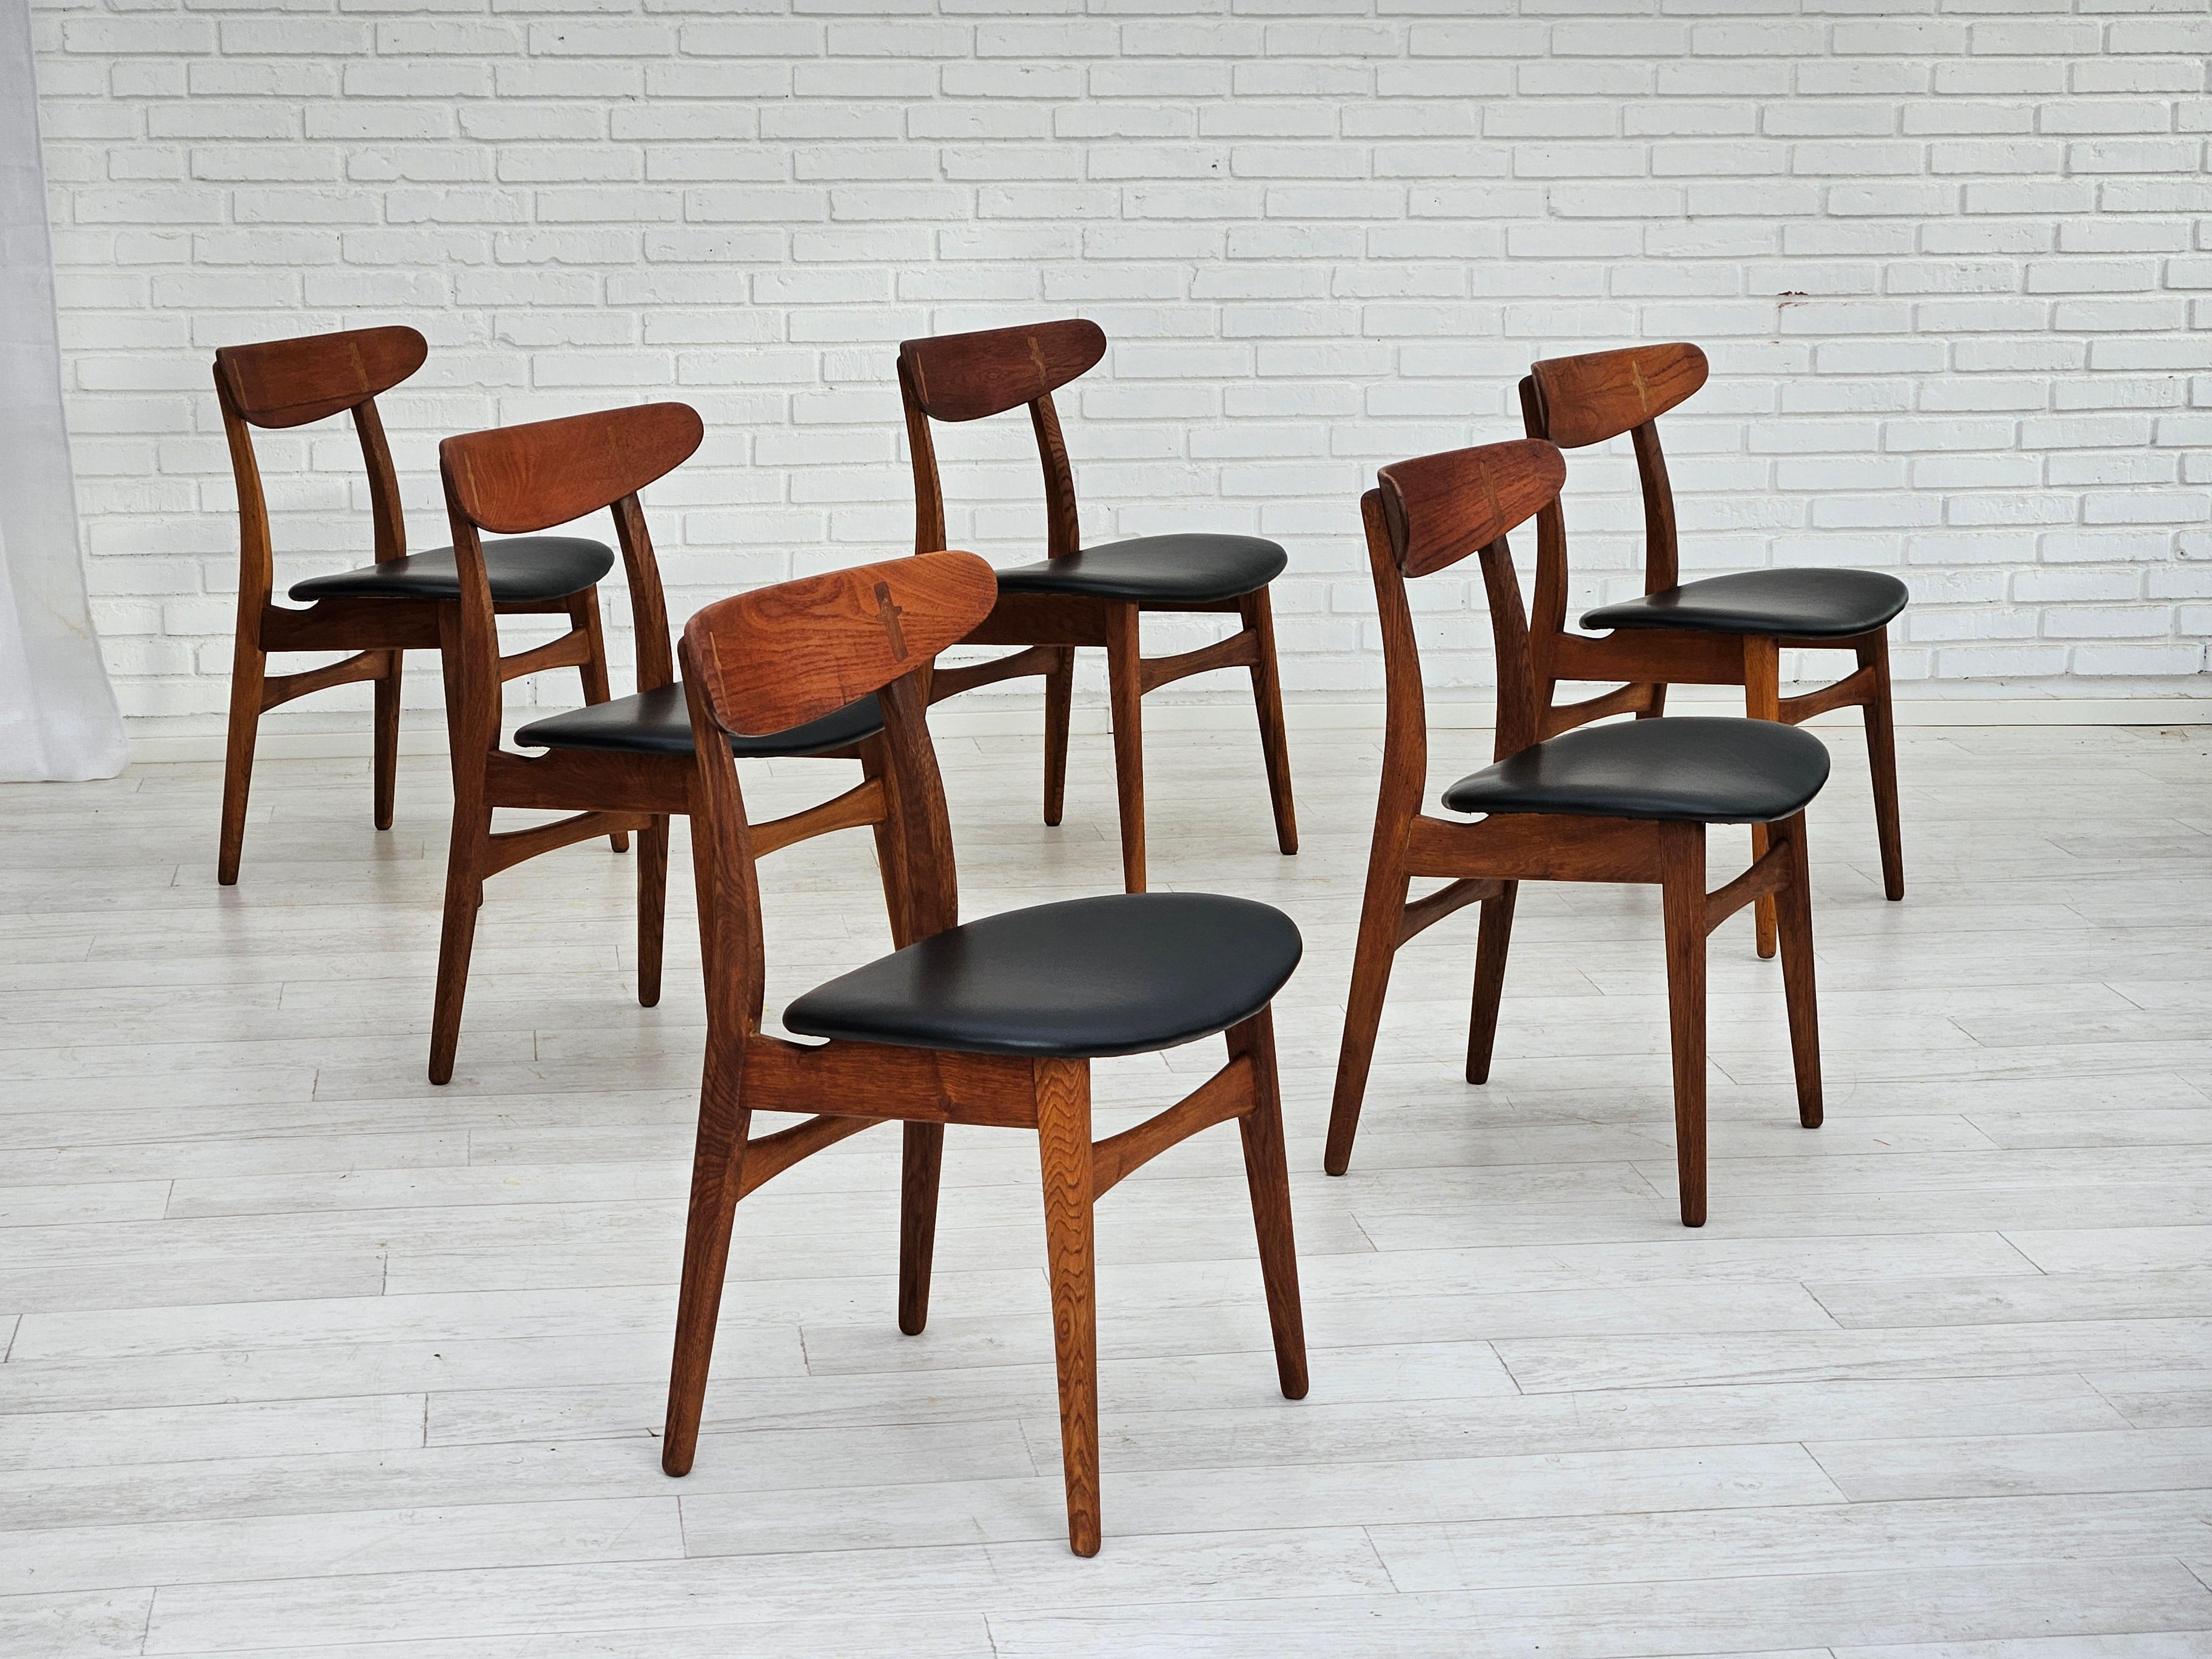 1960s, Danish design by H.J.Wegner. Set of 6 pcs dining chairs model nr.30. Completely renovated-reupholstered. Quality black Sørensen leather. Teak wood and oak wood. Wood renewed. Manufactured by Danish furniture manufacturer Carl Hansen & Søn in